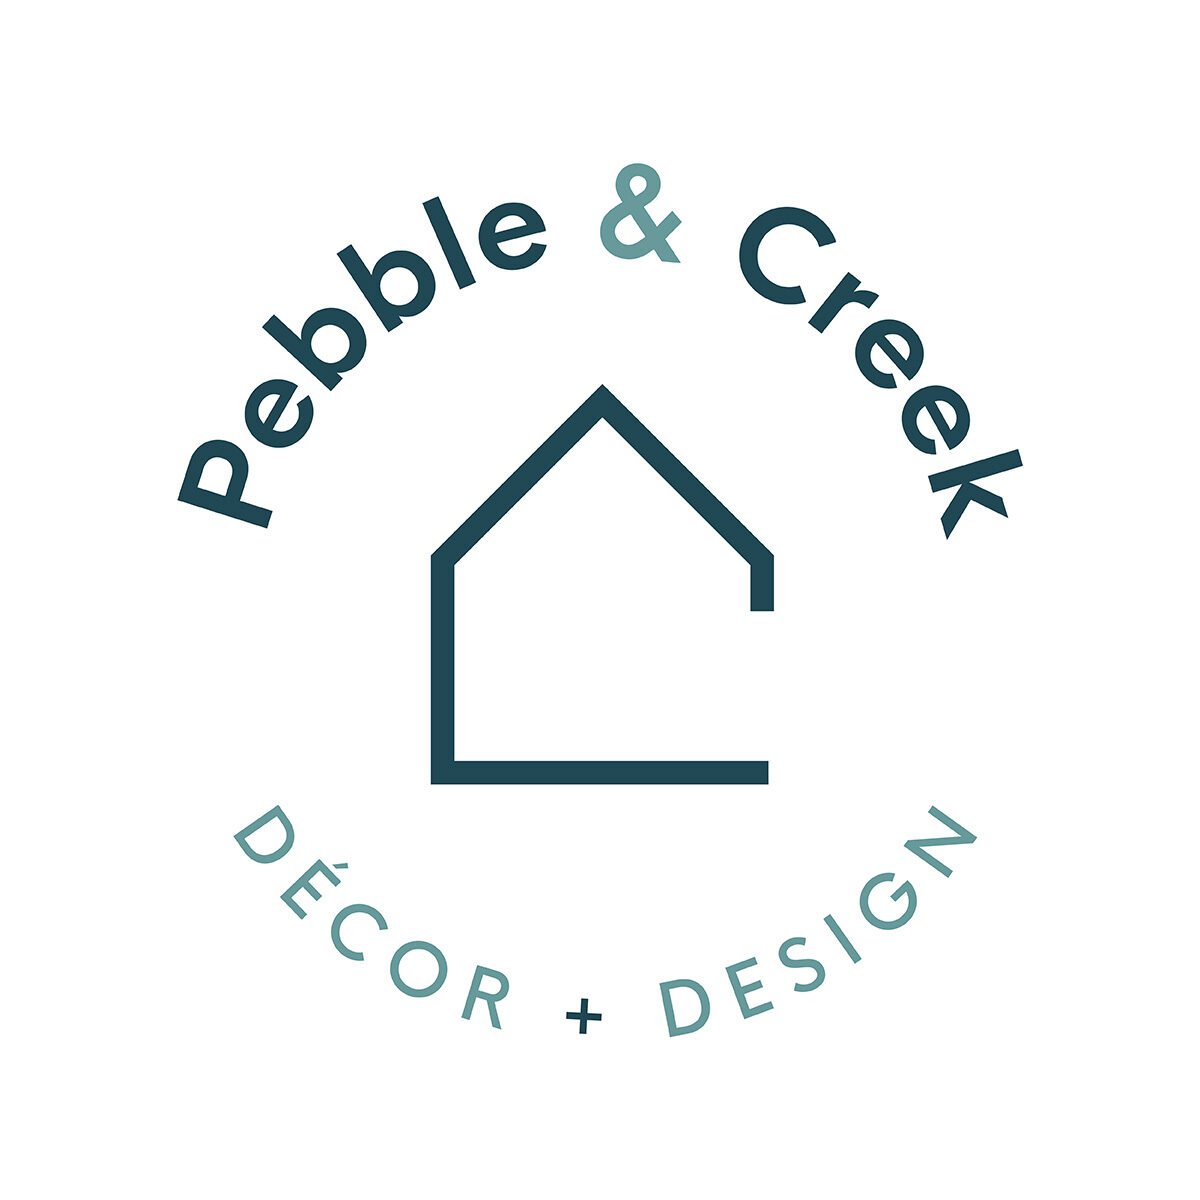 lindsay-mcghee-designs-pebble-and-creek-logo-badge-1200